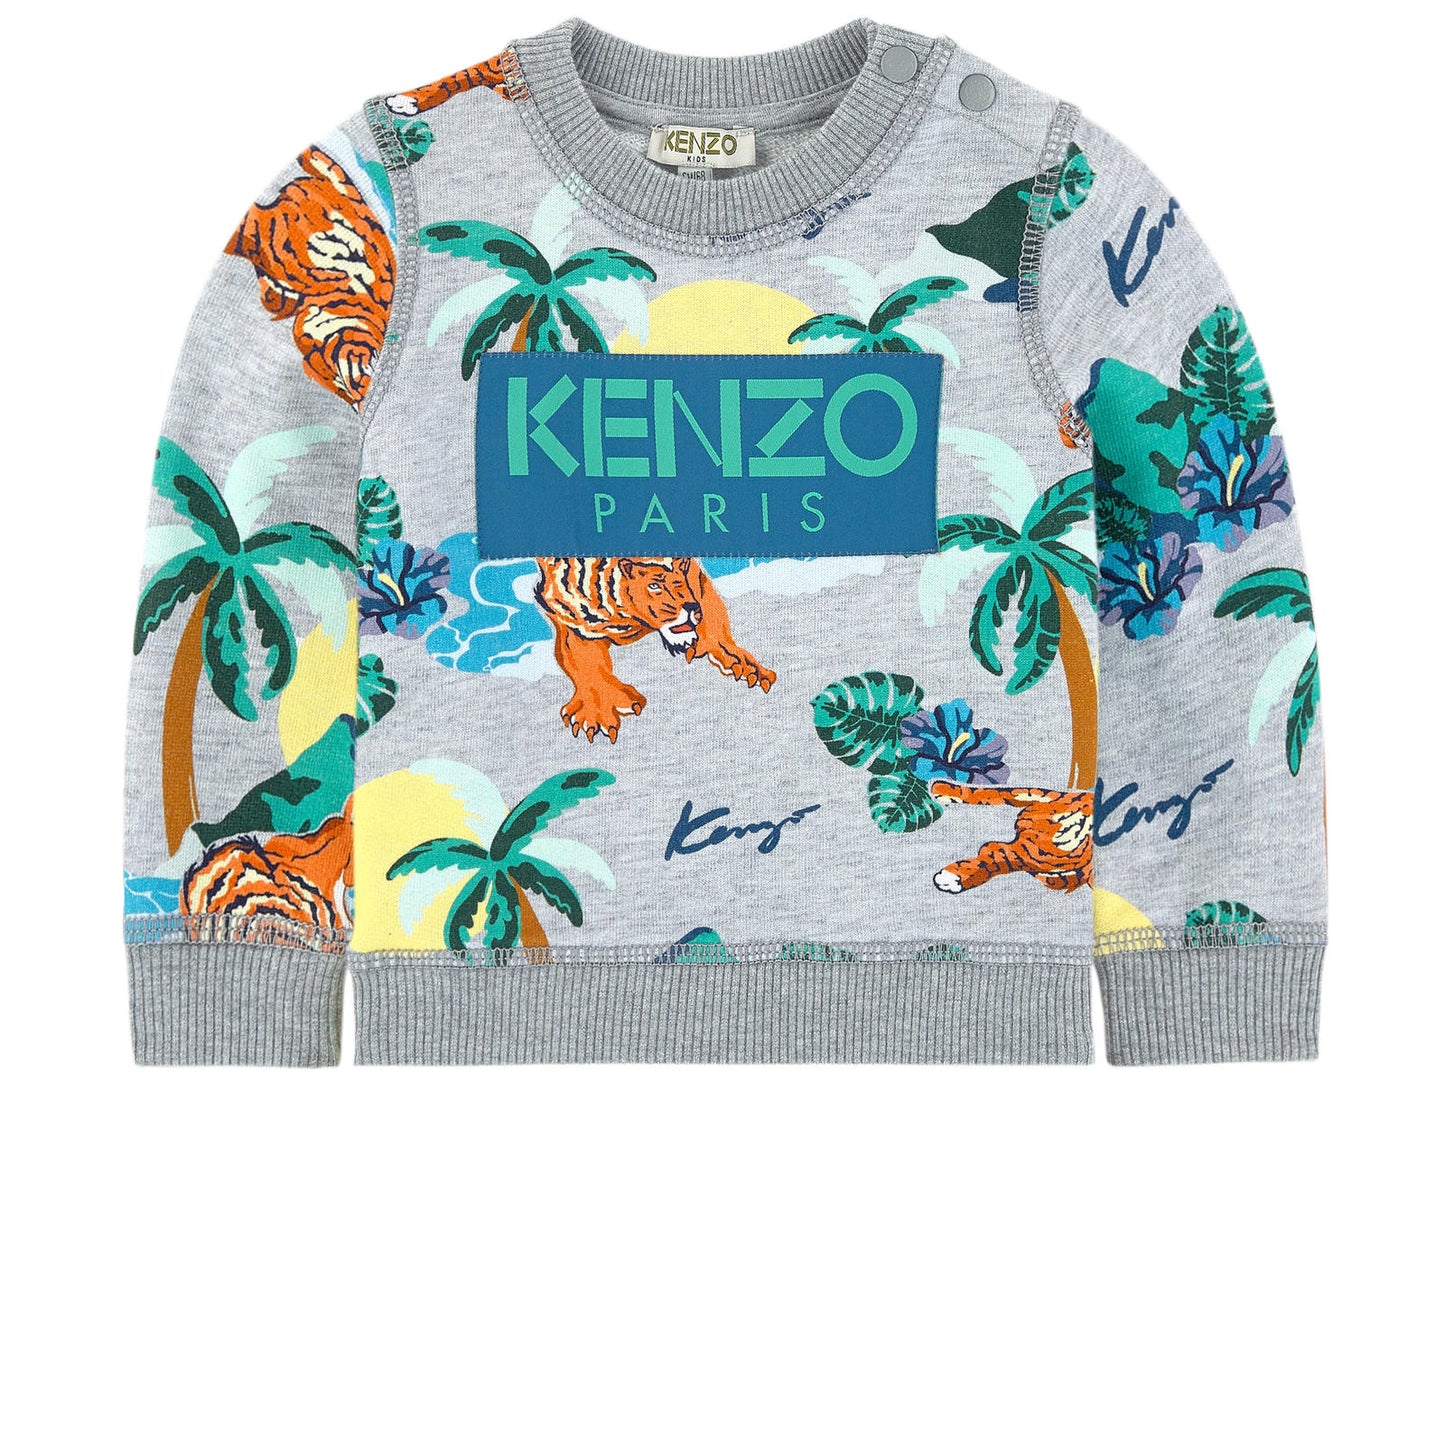 Kenzo Kids Graphic Sweatshirt- Fantastic Kenzo